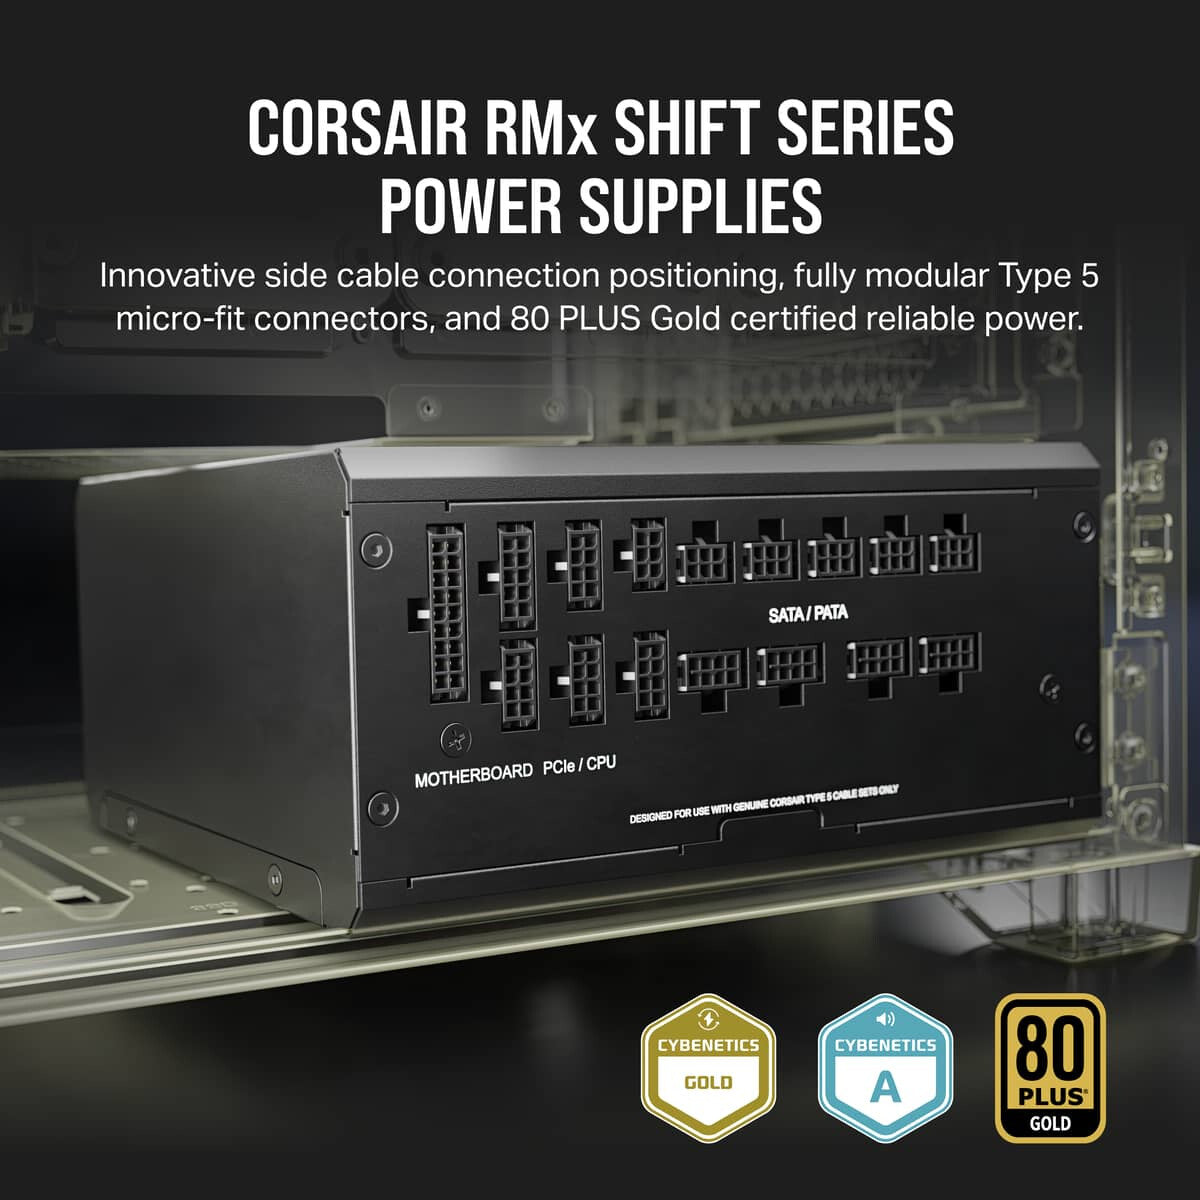 Corsair RM1200x - 1200W 80+ Gold Fully Modular Power Supply Unit